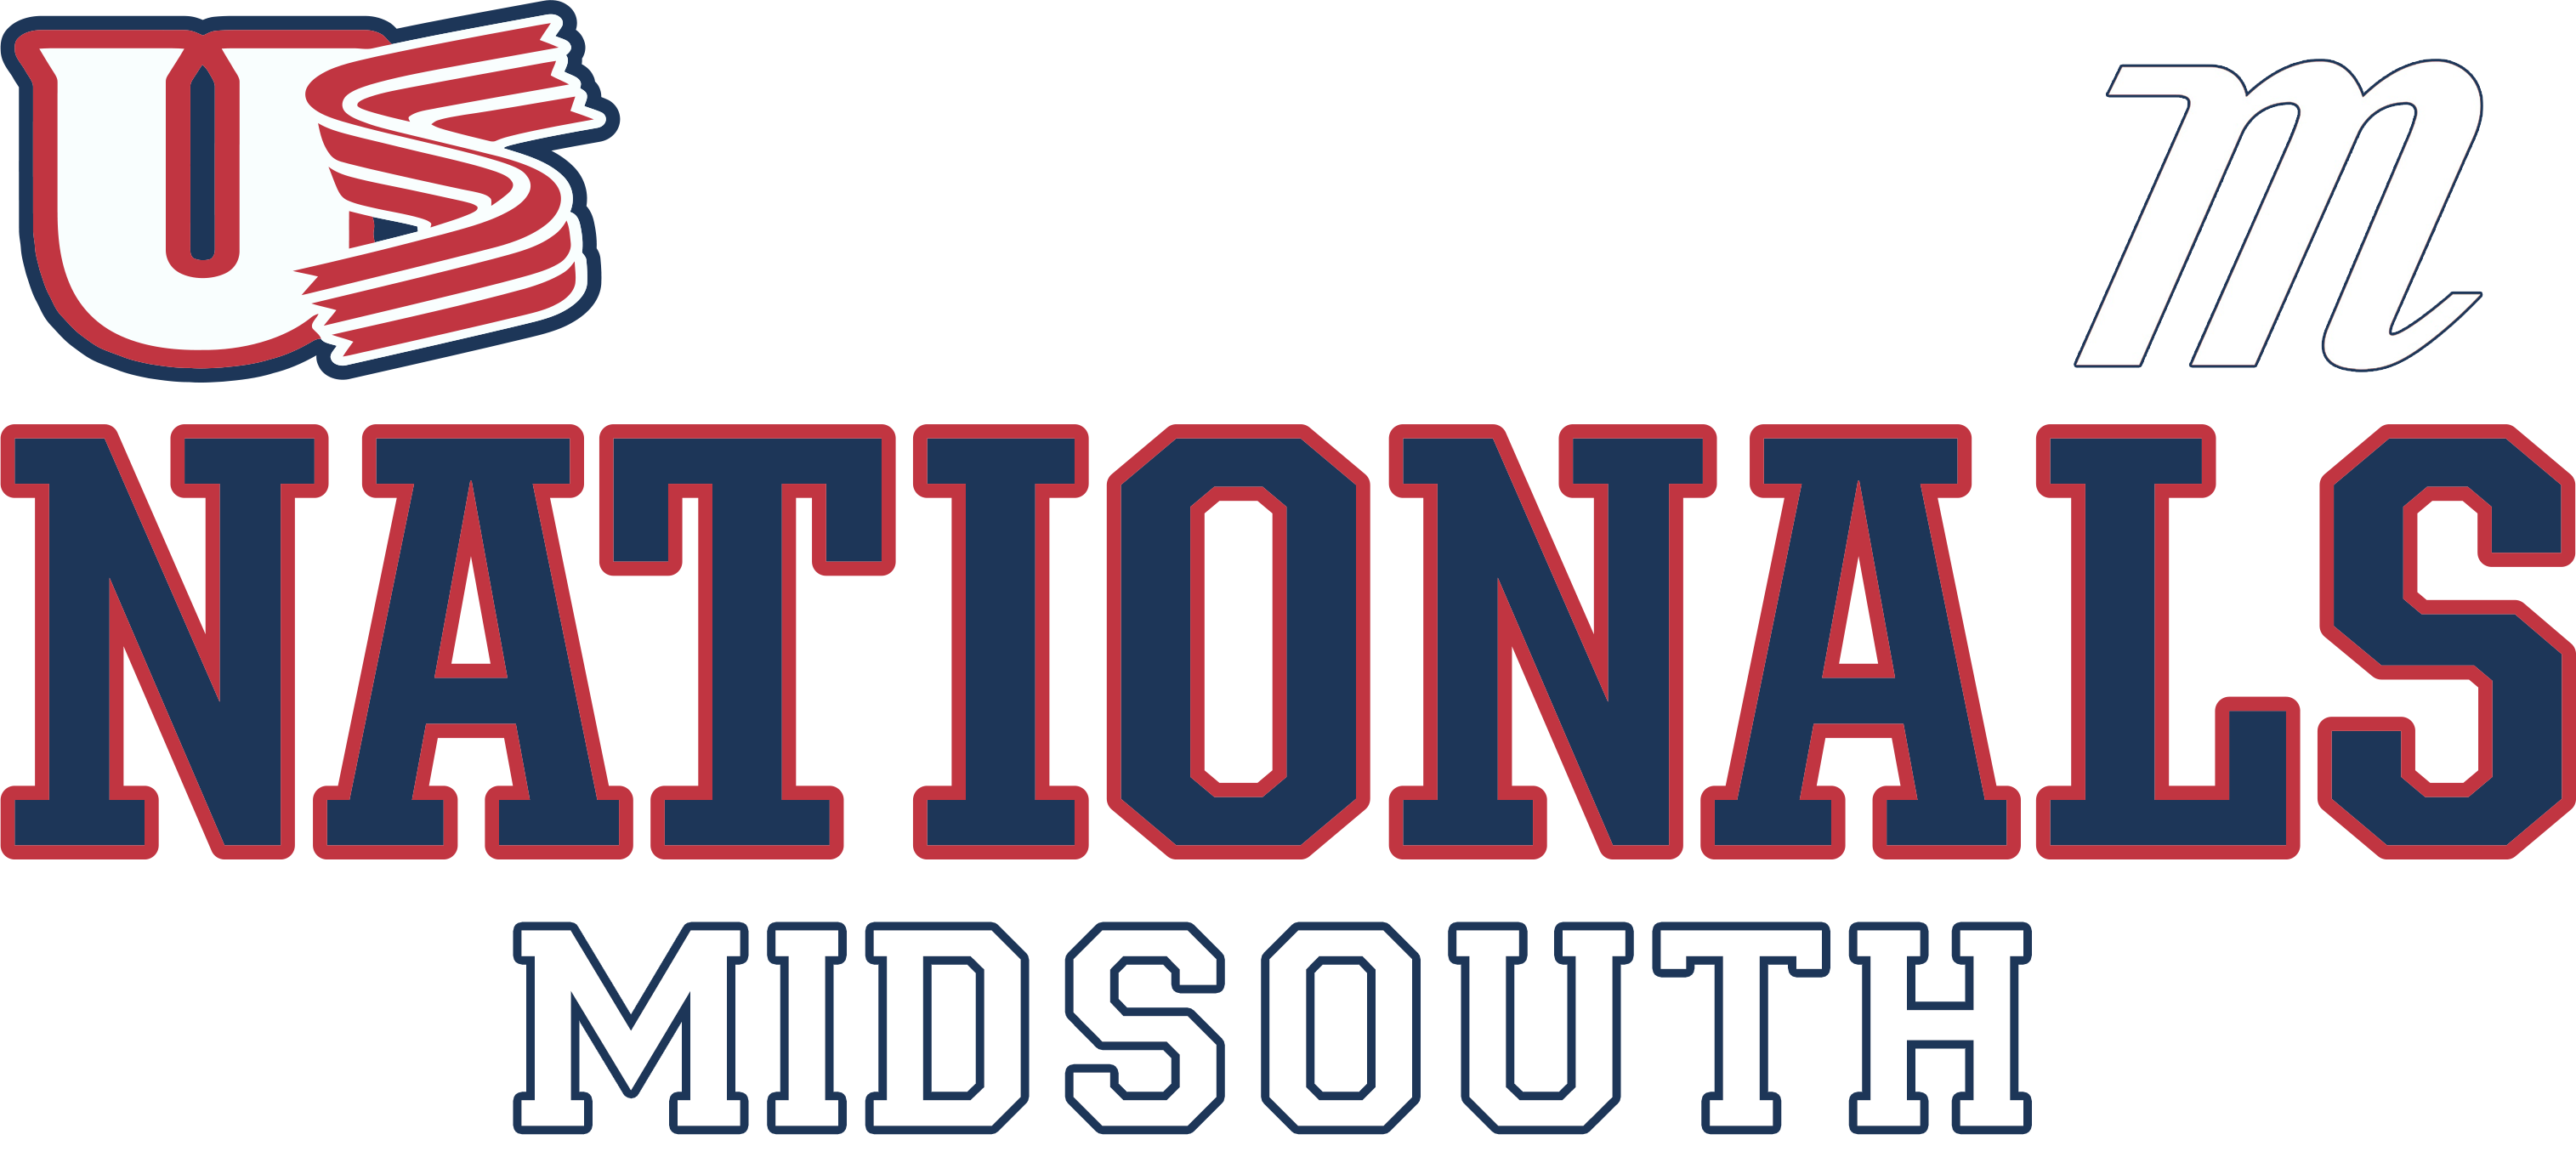 US Nationals Midsouth Baseball Club